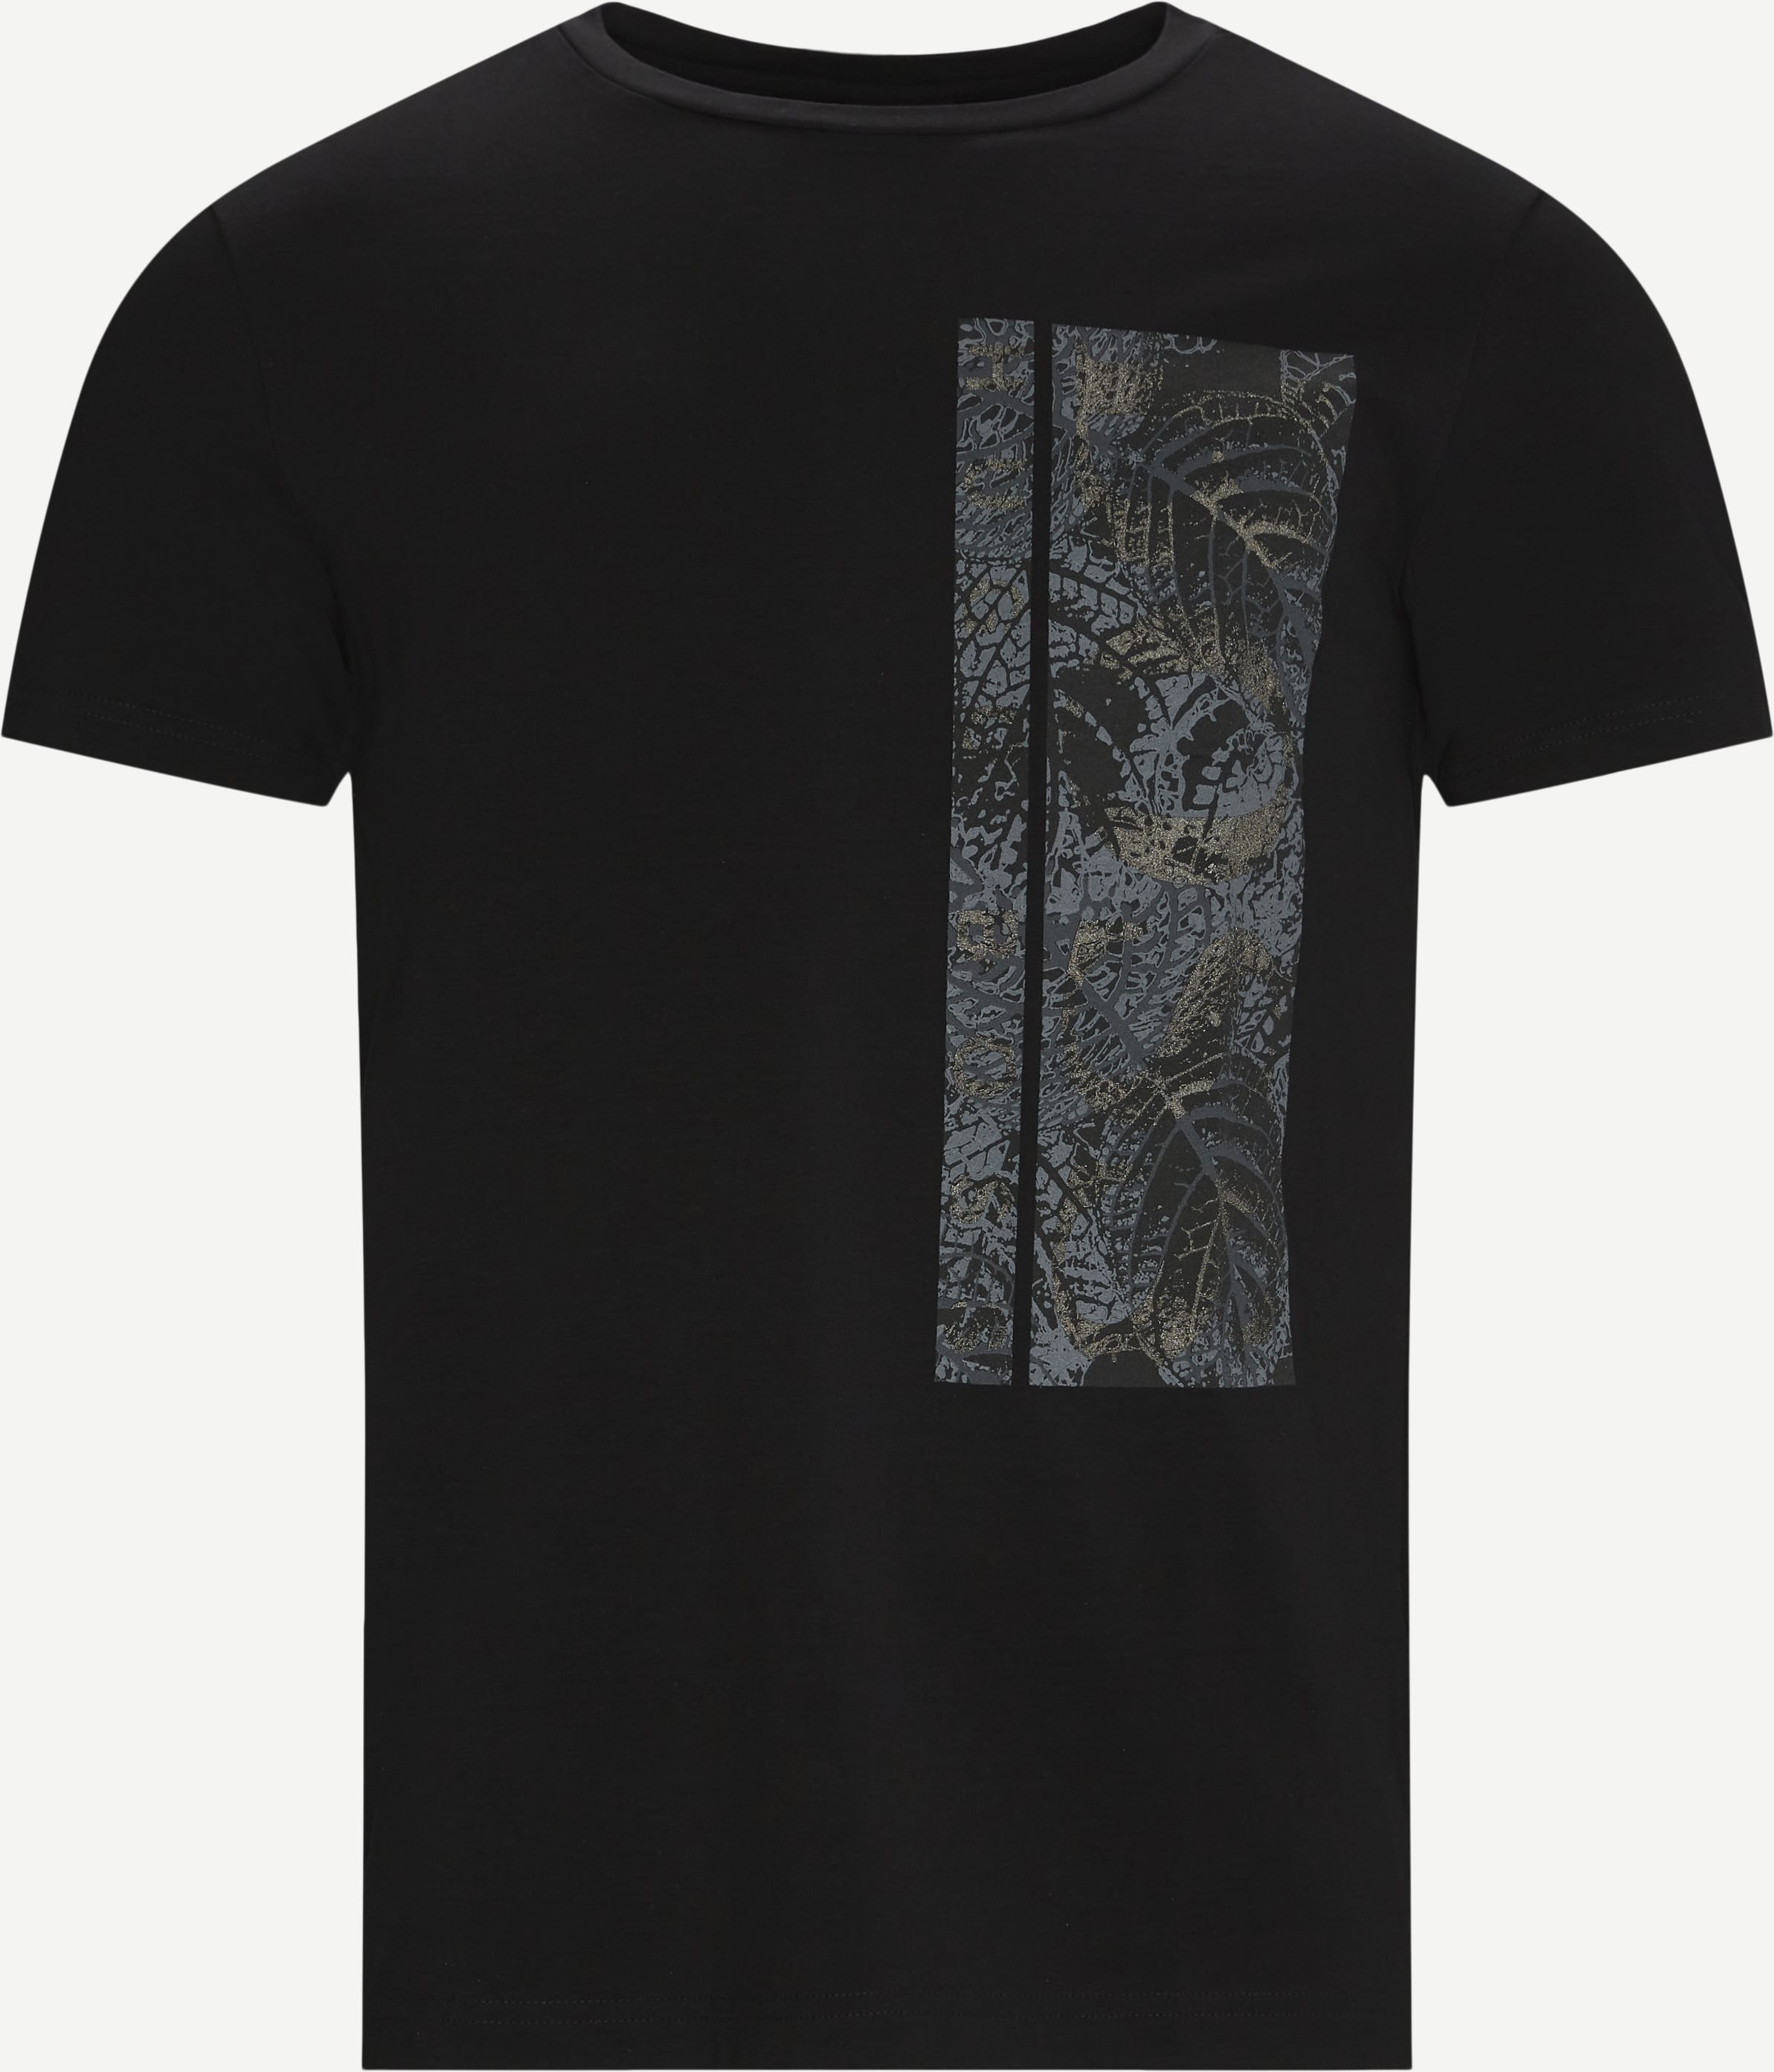 Tee 10 T-shirt - T-shirts - Regular fit - Black